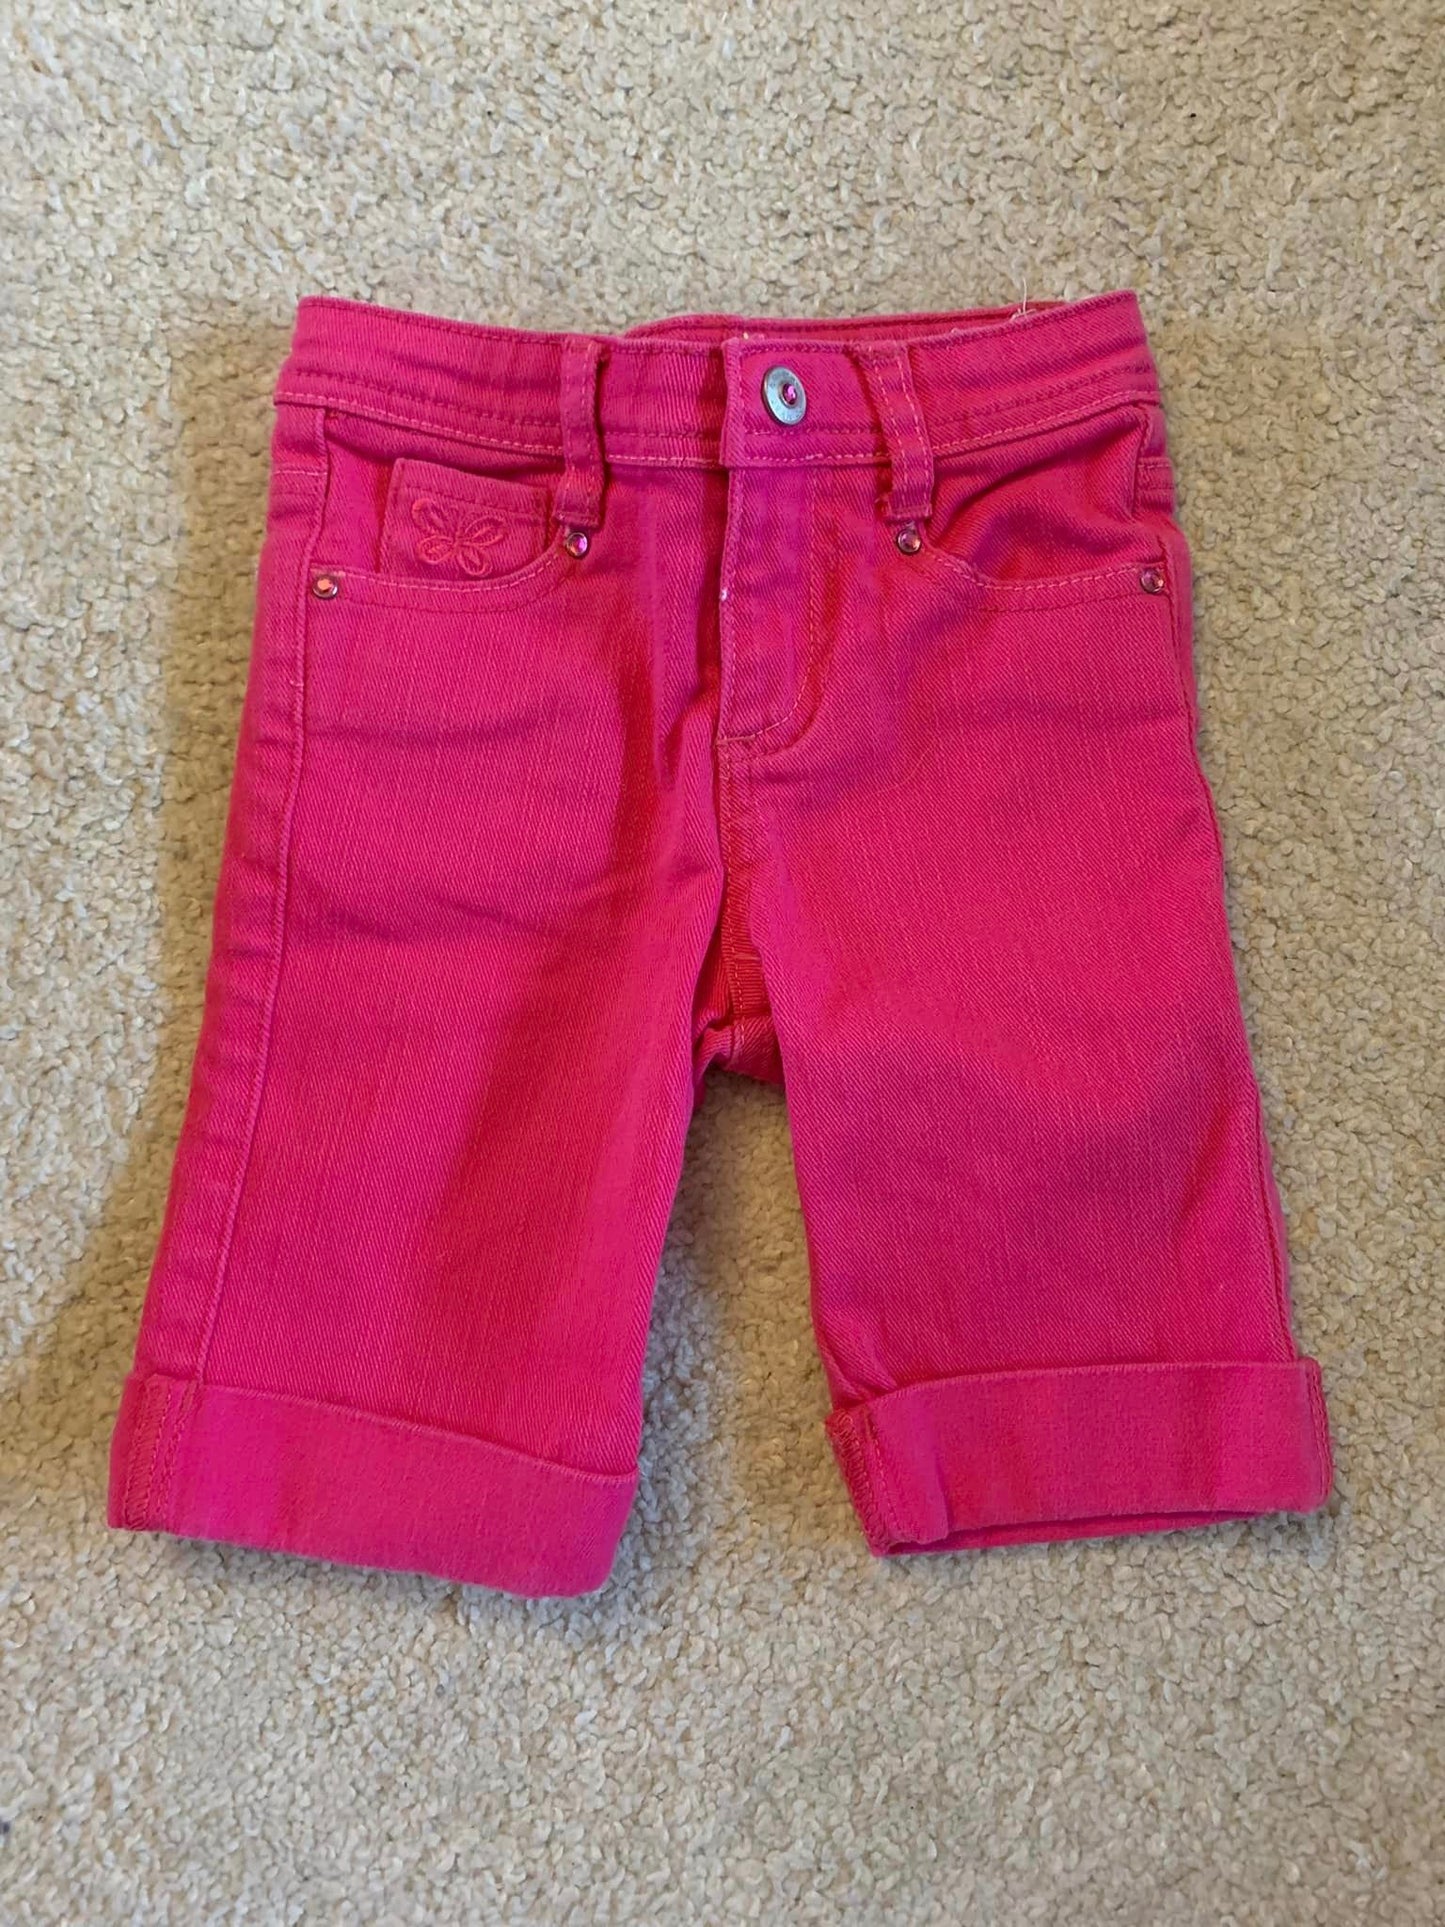 4T Girls Pink Denim Pants (capris)